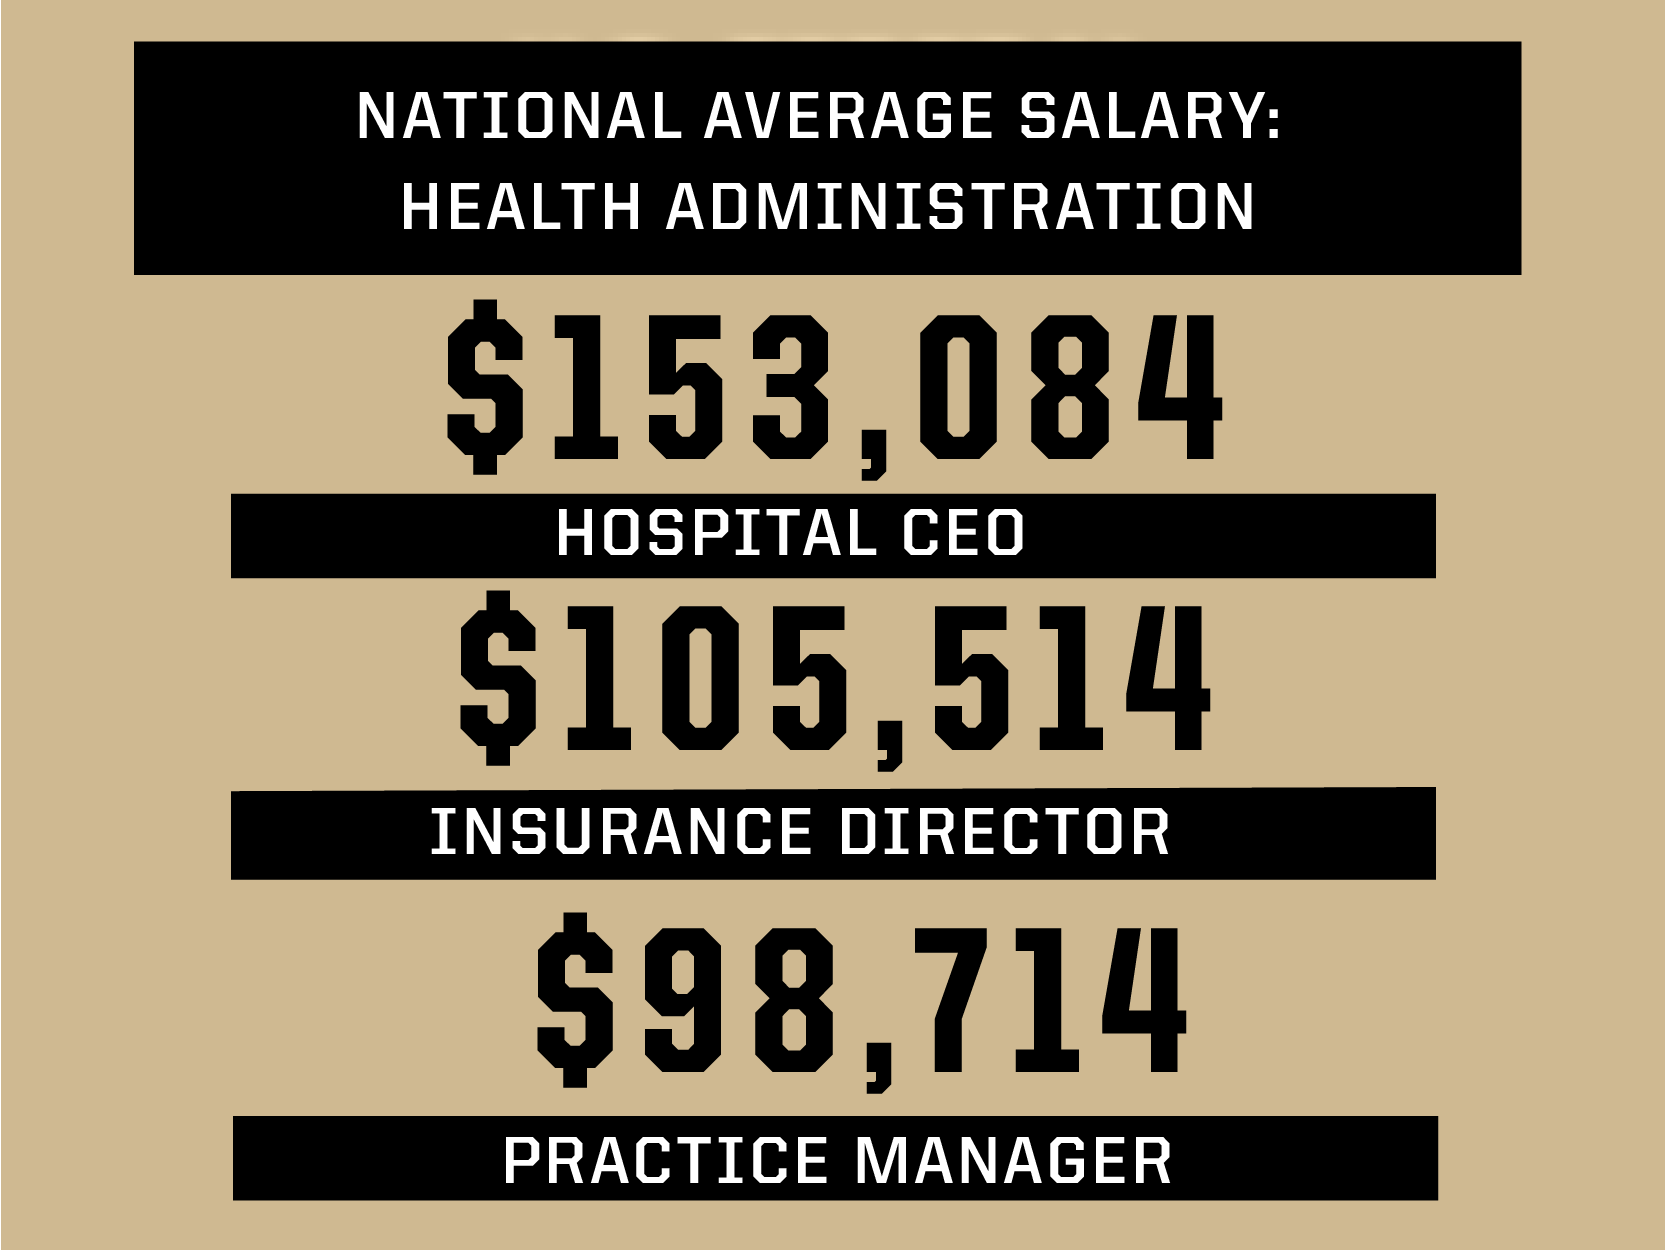 National average salary: health administration 153,084